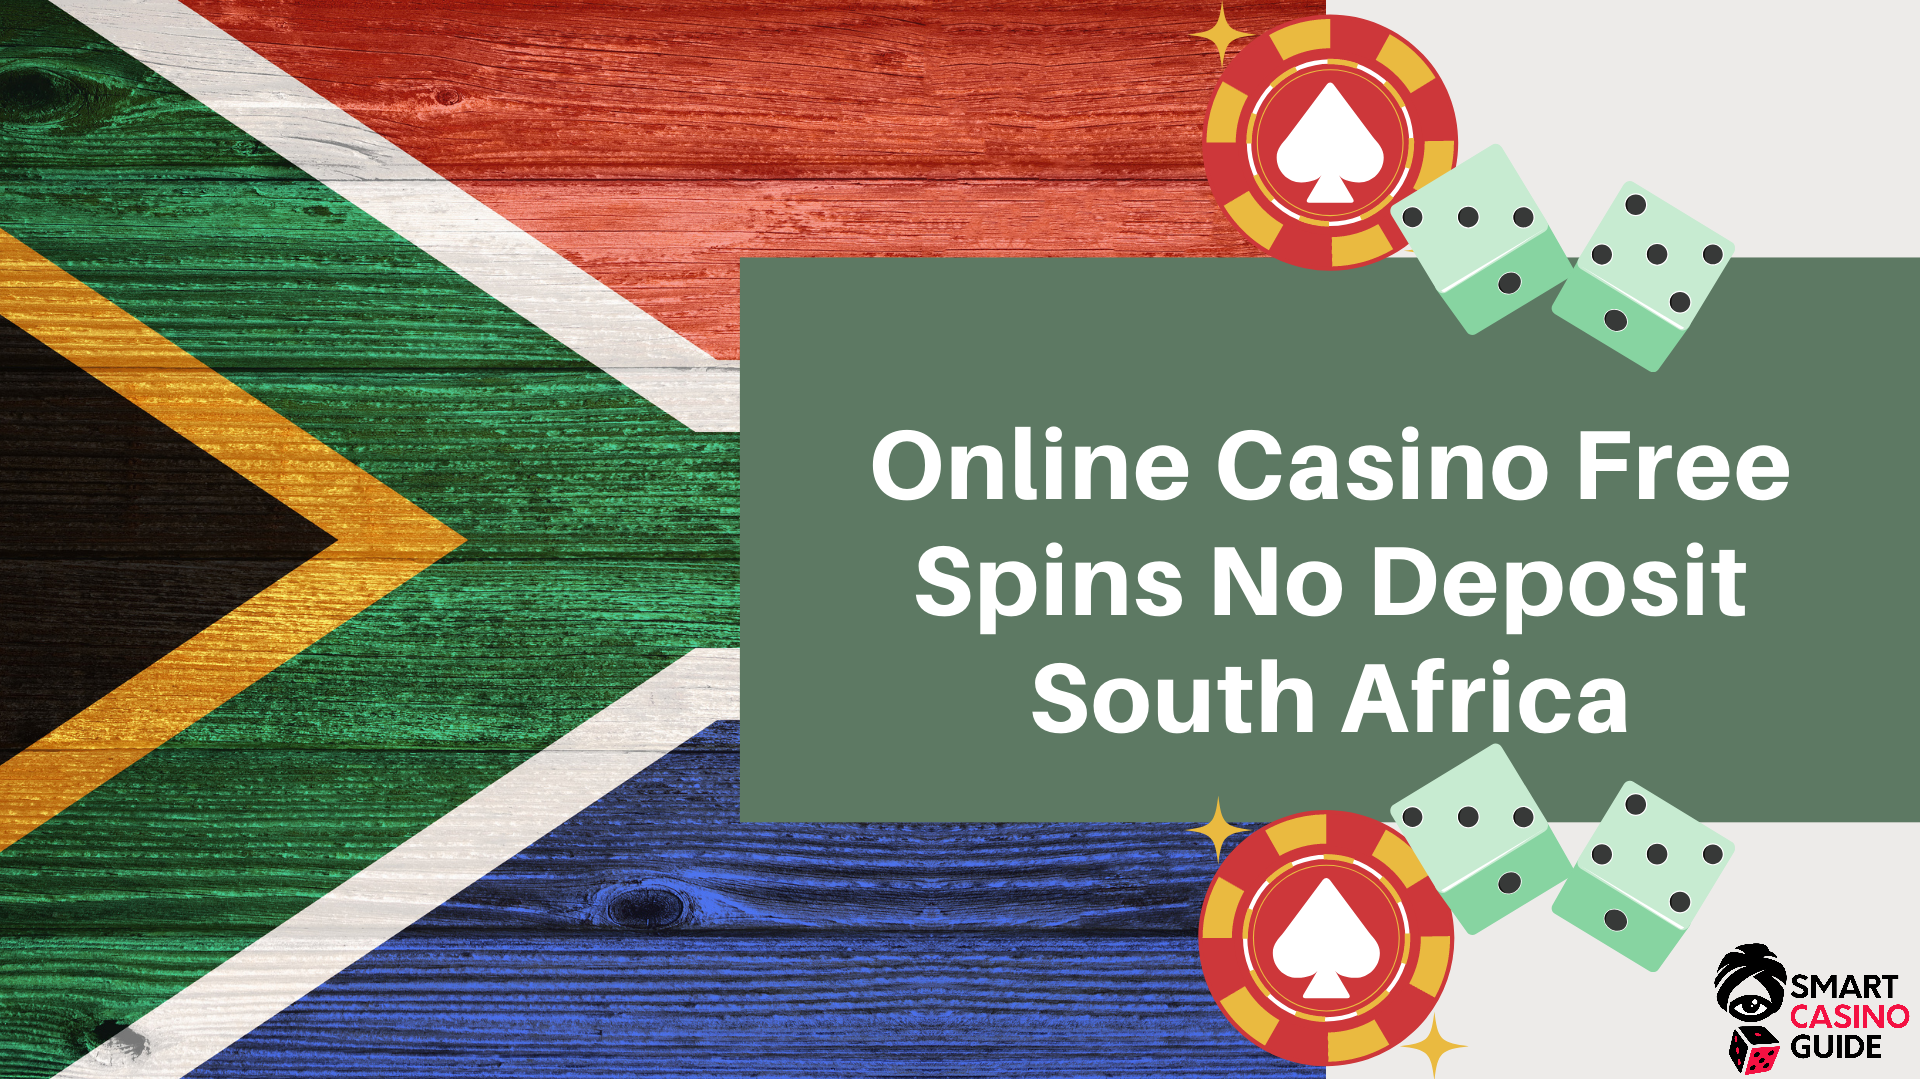 Free no deposit bonus online casino south africa покер казино и ставки на спорт бесплатно